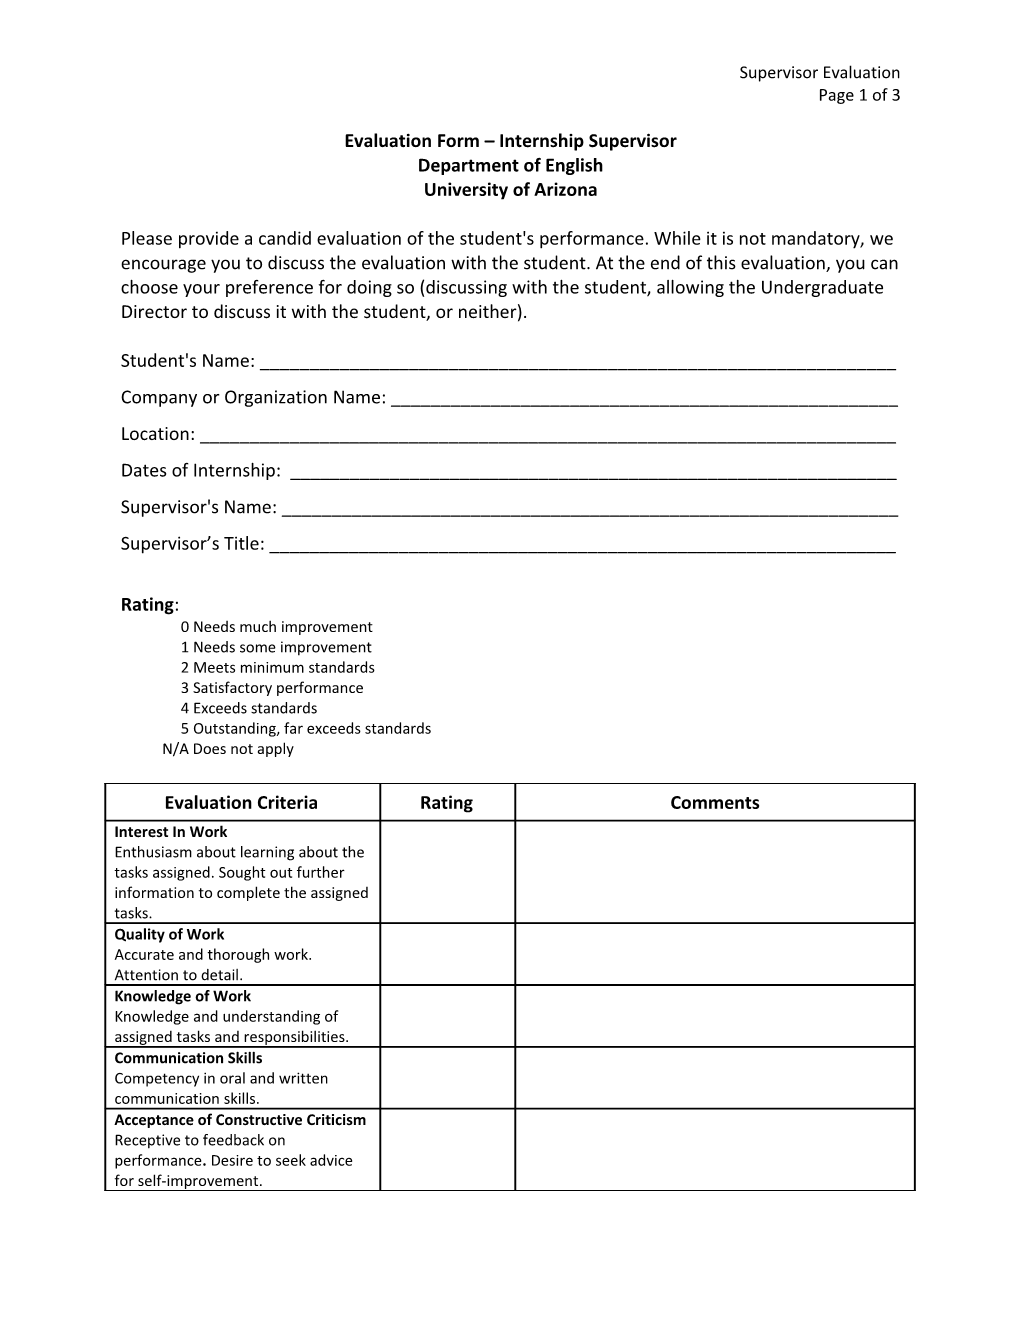 Evaluation Form Internship Supervisor